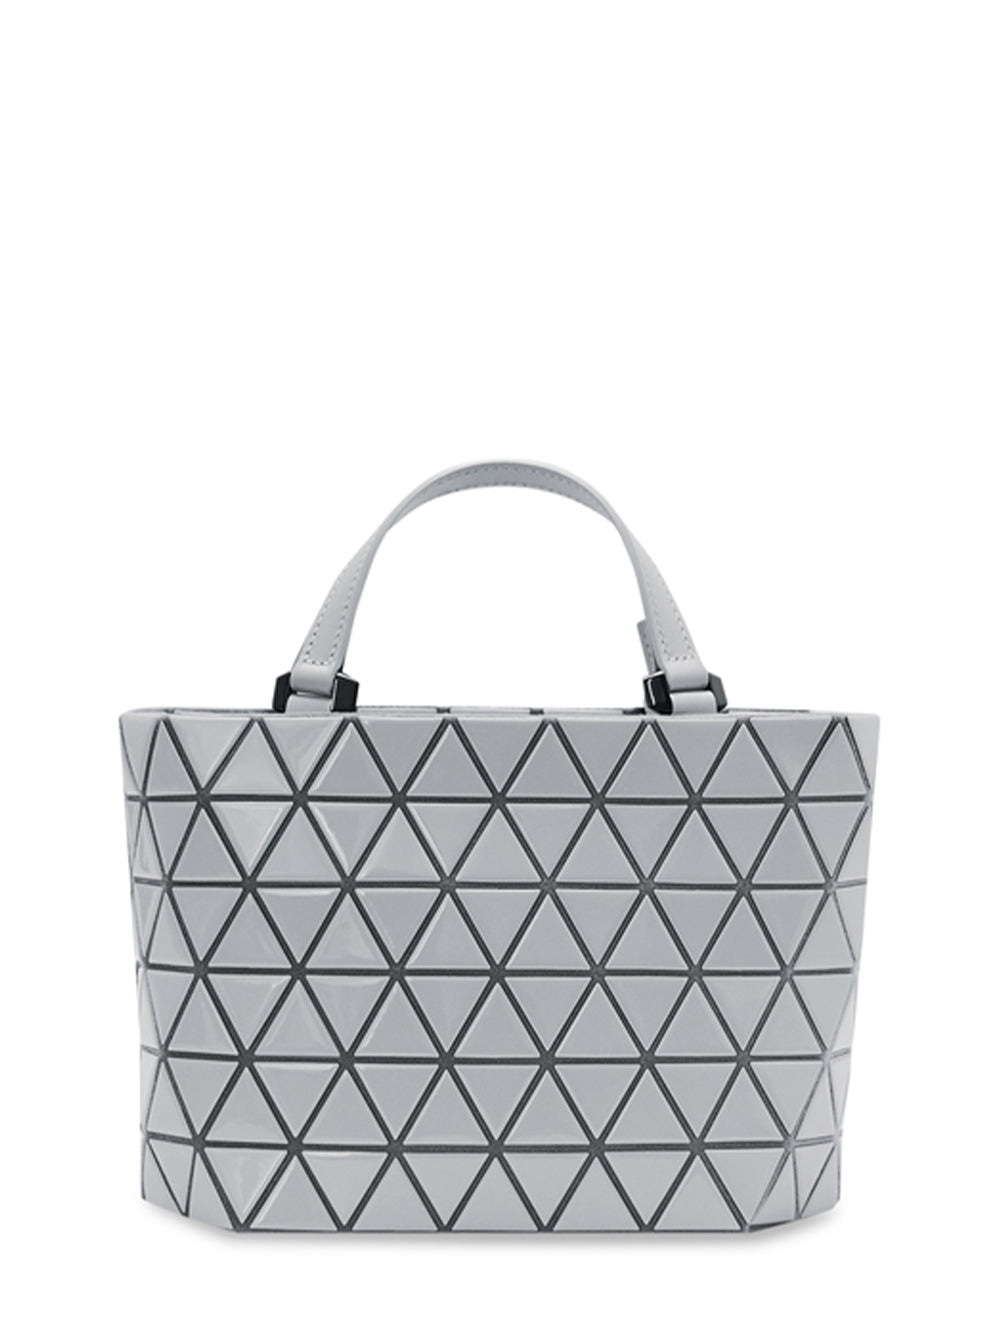 CRYSTAL GLOSS Handbag (Mini) (Light Gray)